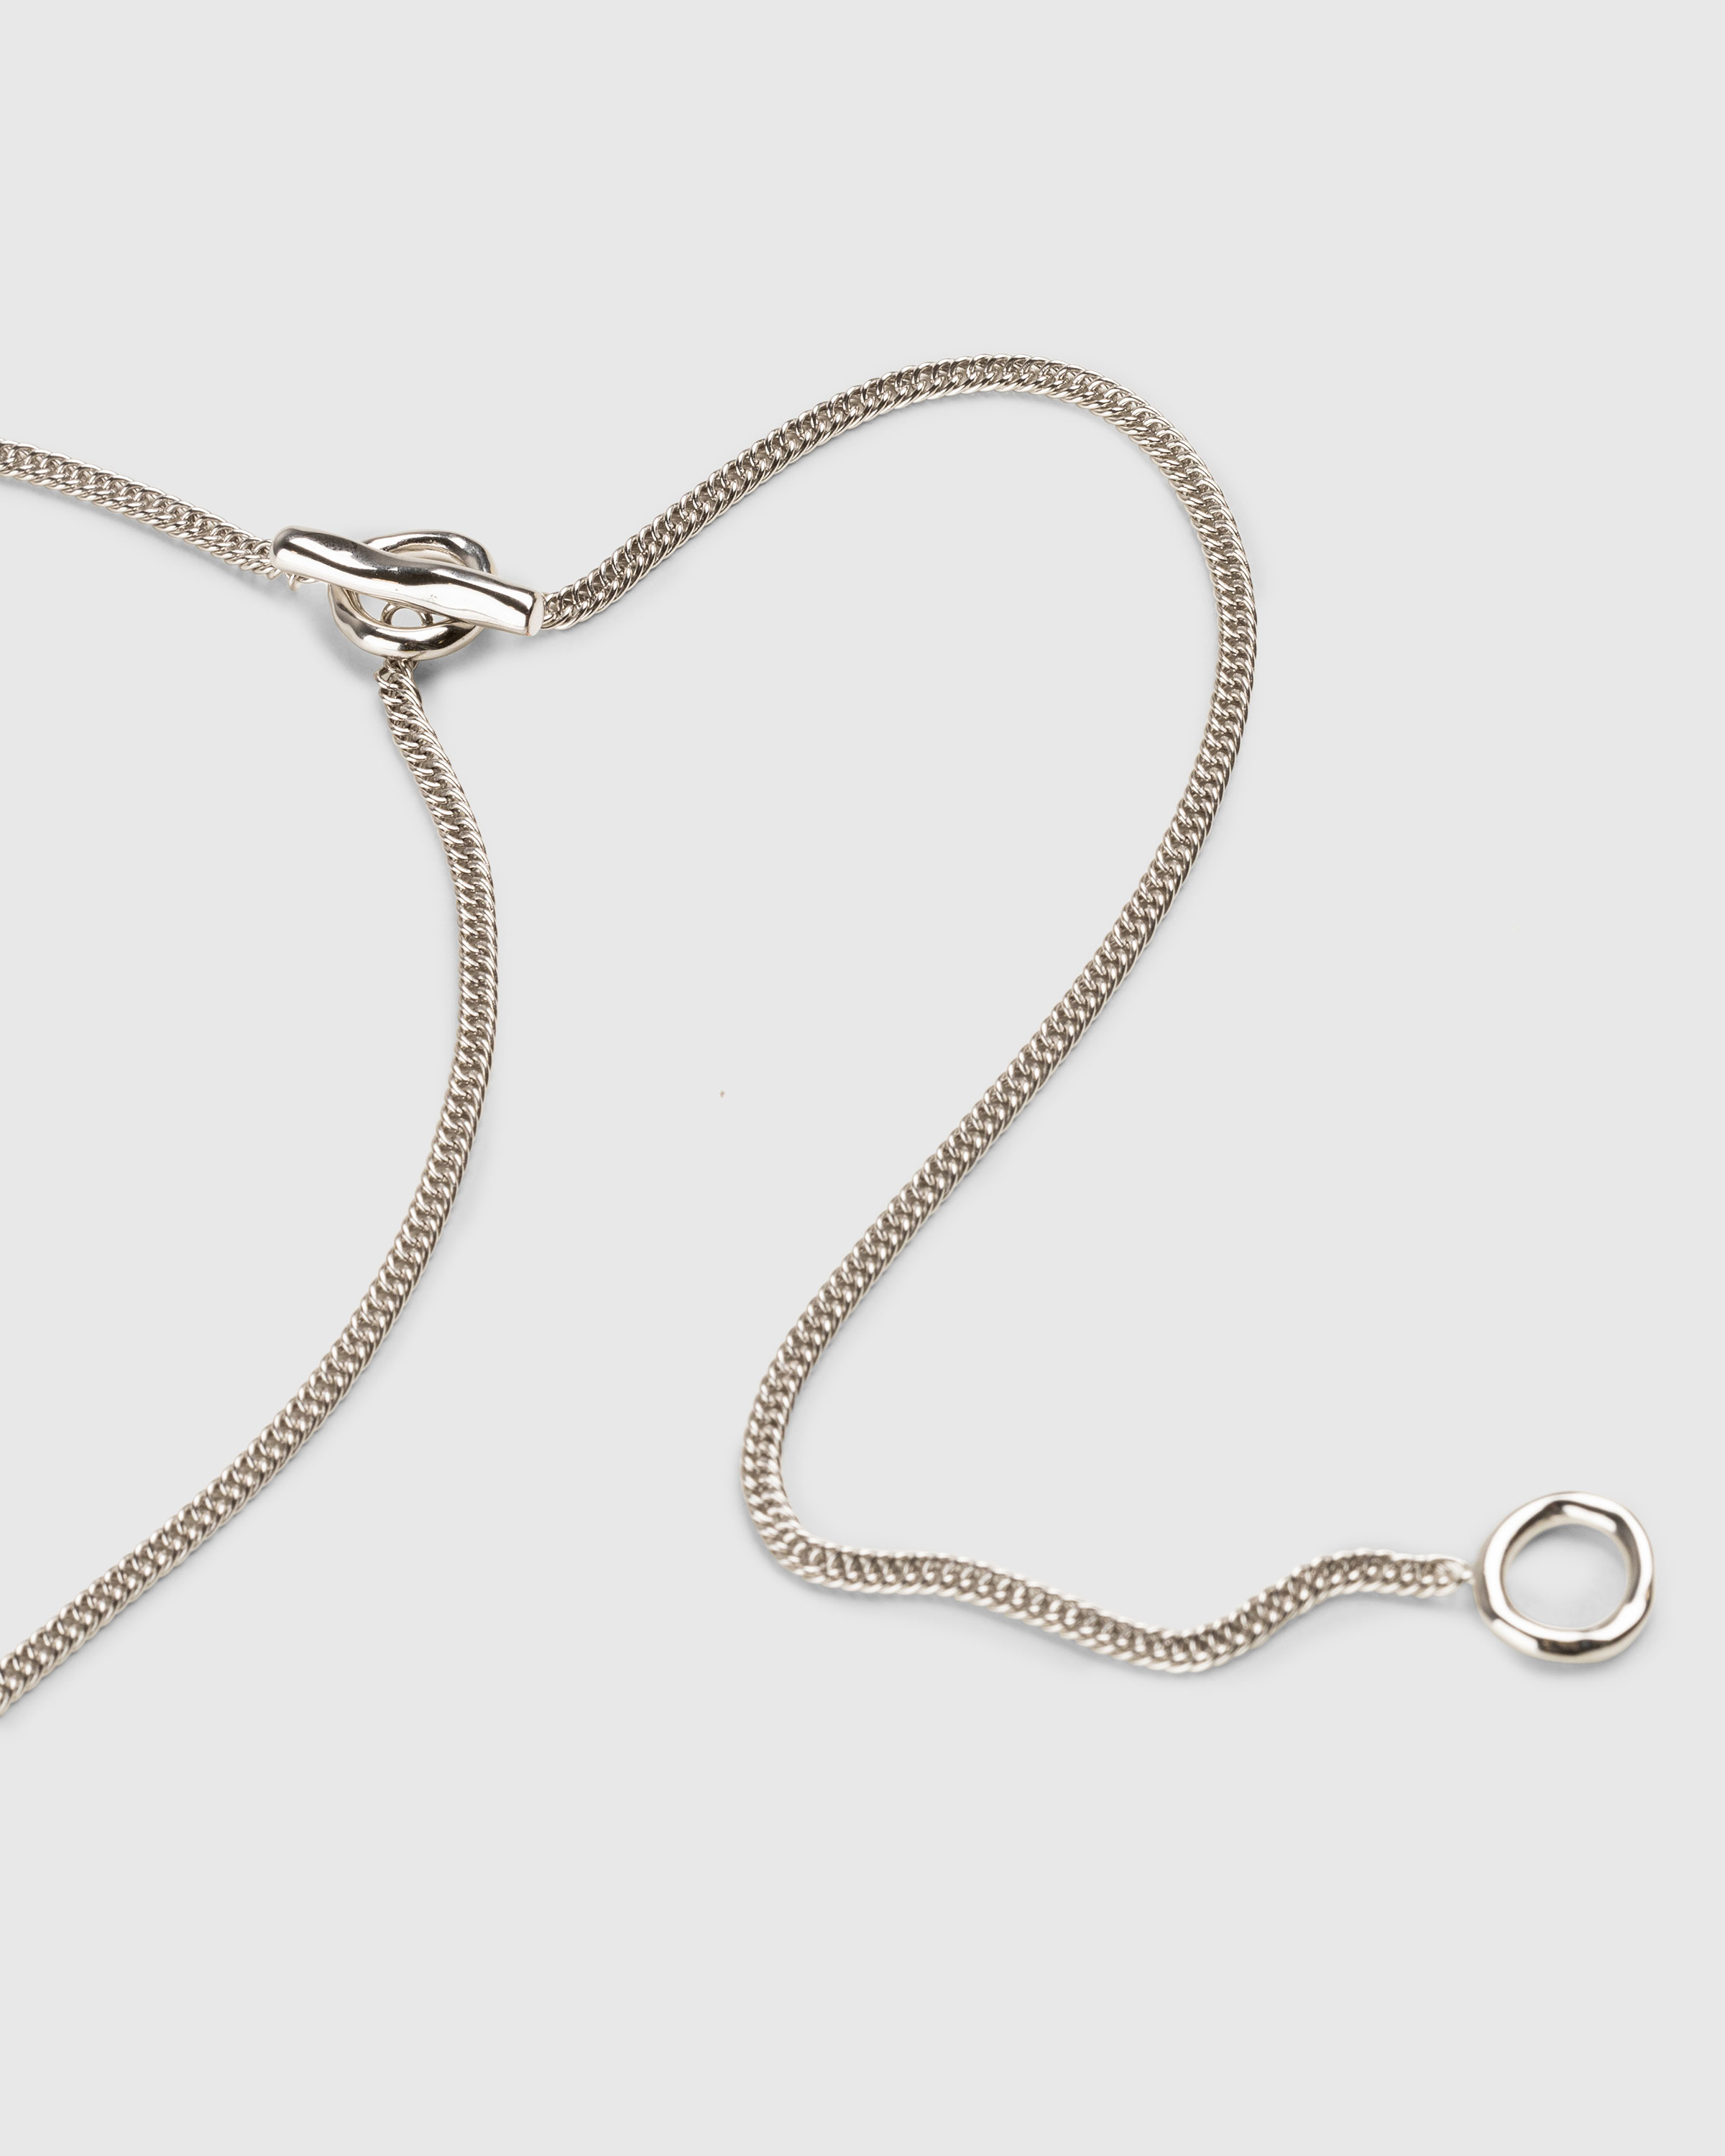 Jil Sander – BM9 Necklace 1 Gold/Silver - Earrings - Gold - Image 5